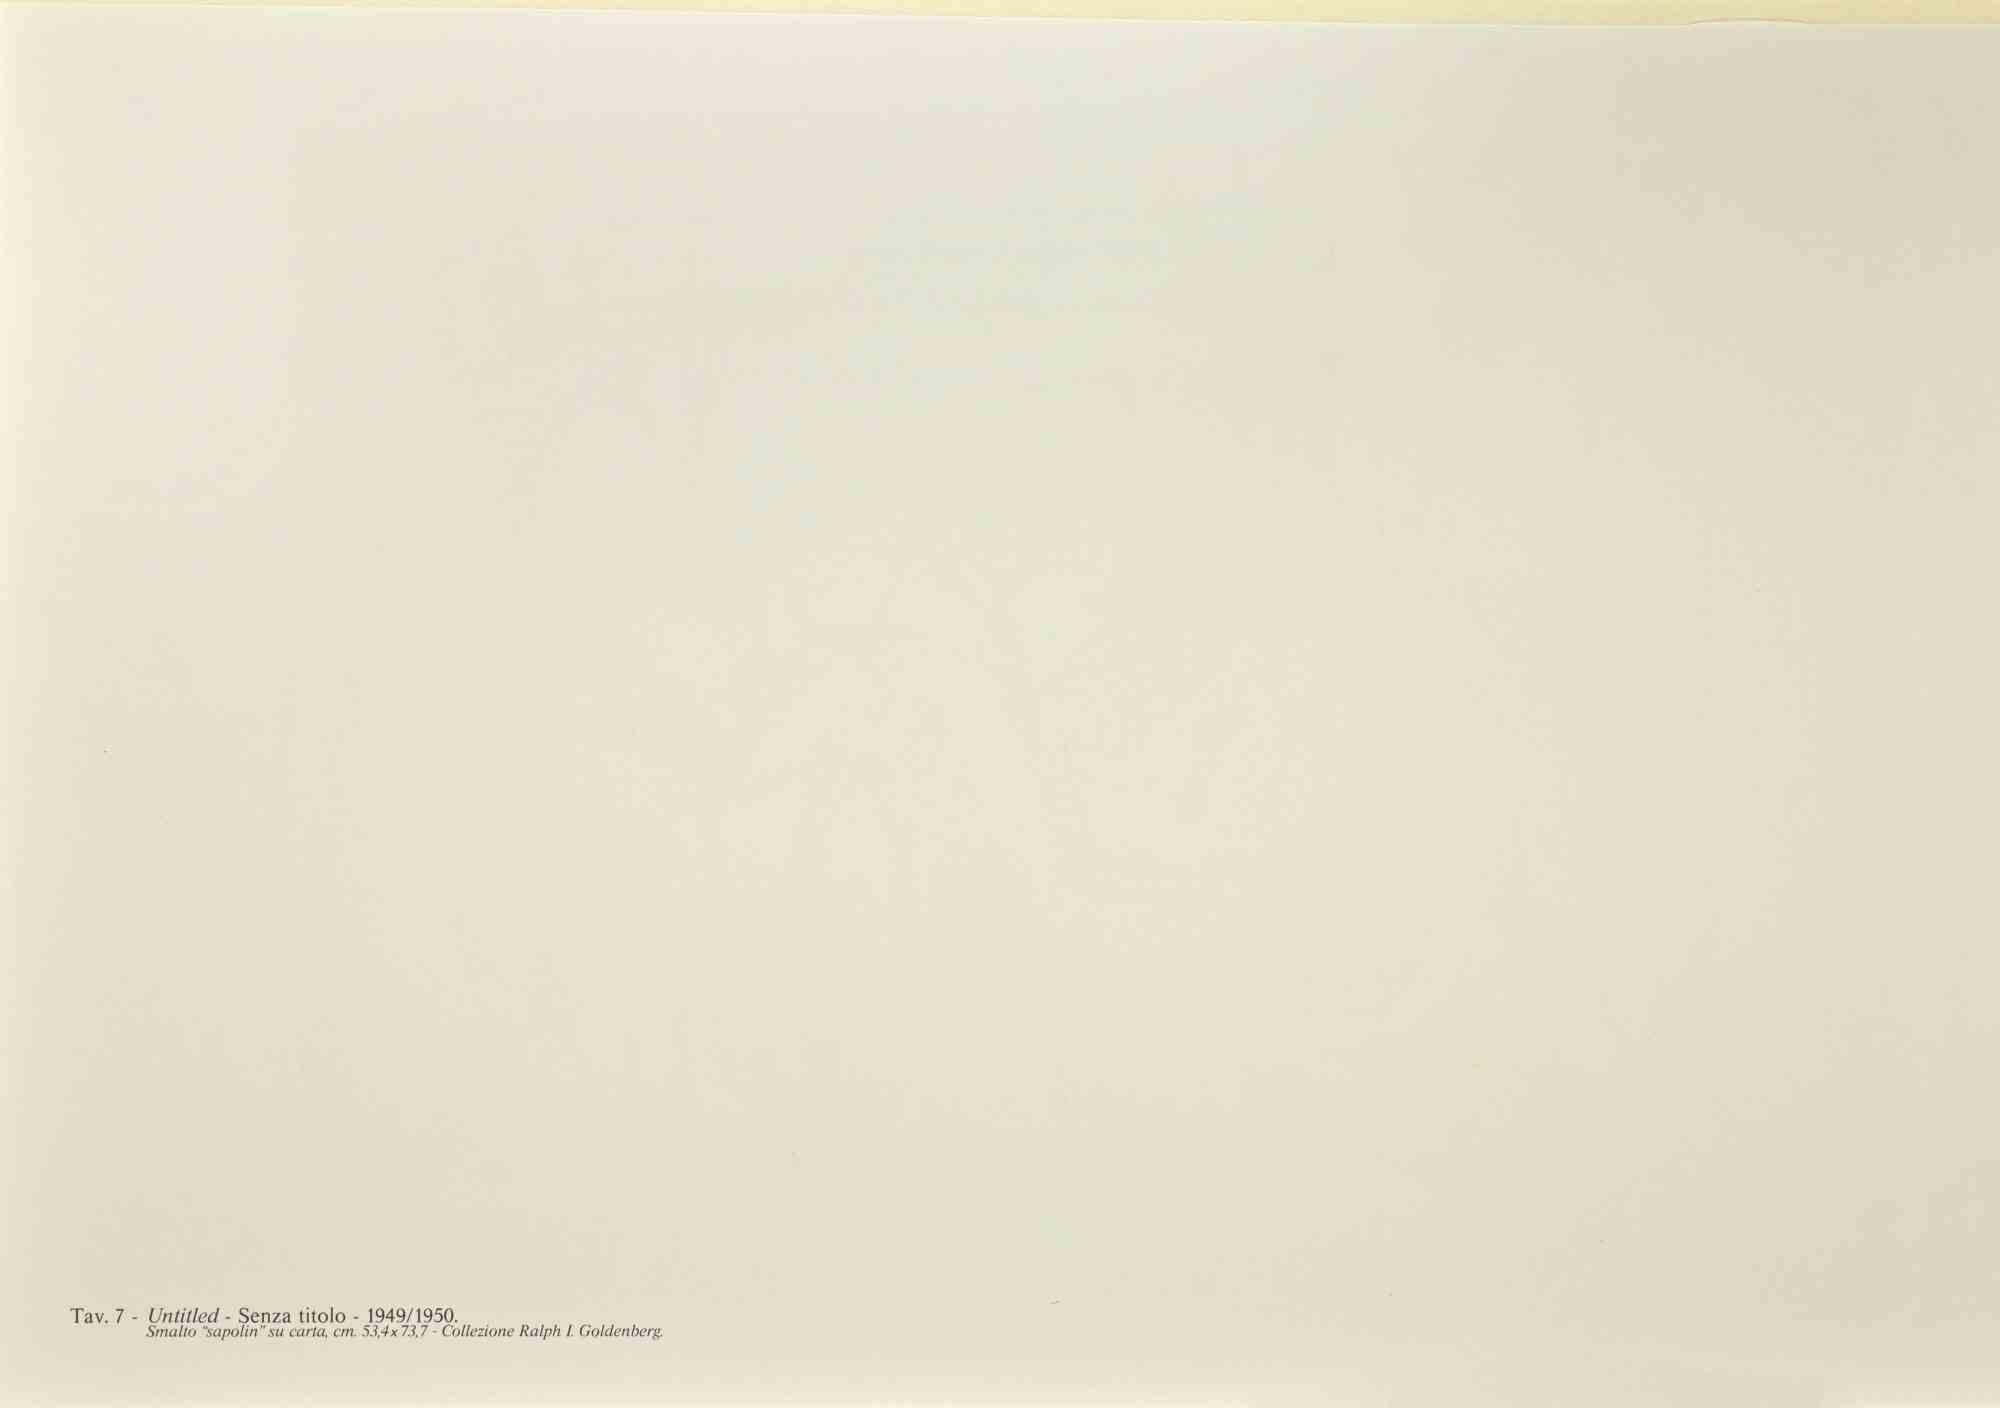 Untitled- Offset and Lithograph after Willem De Kooning - 1985 - Print by Willem de Kooning